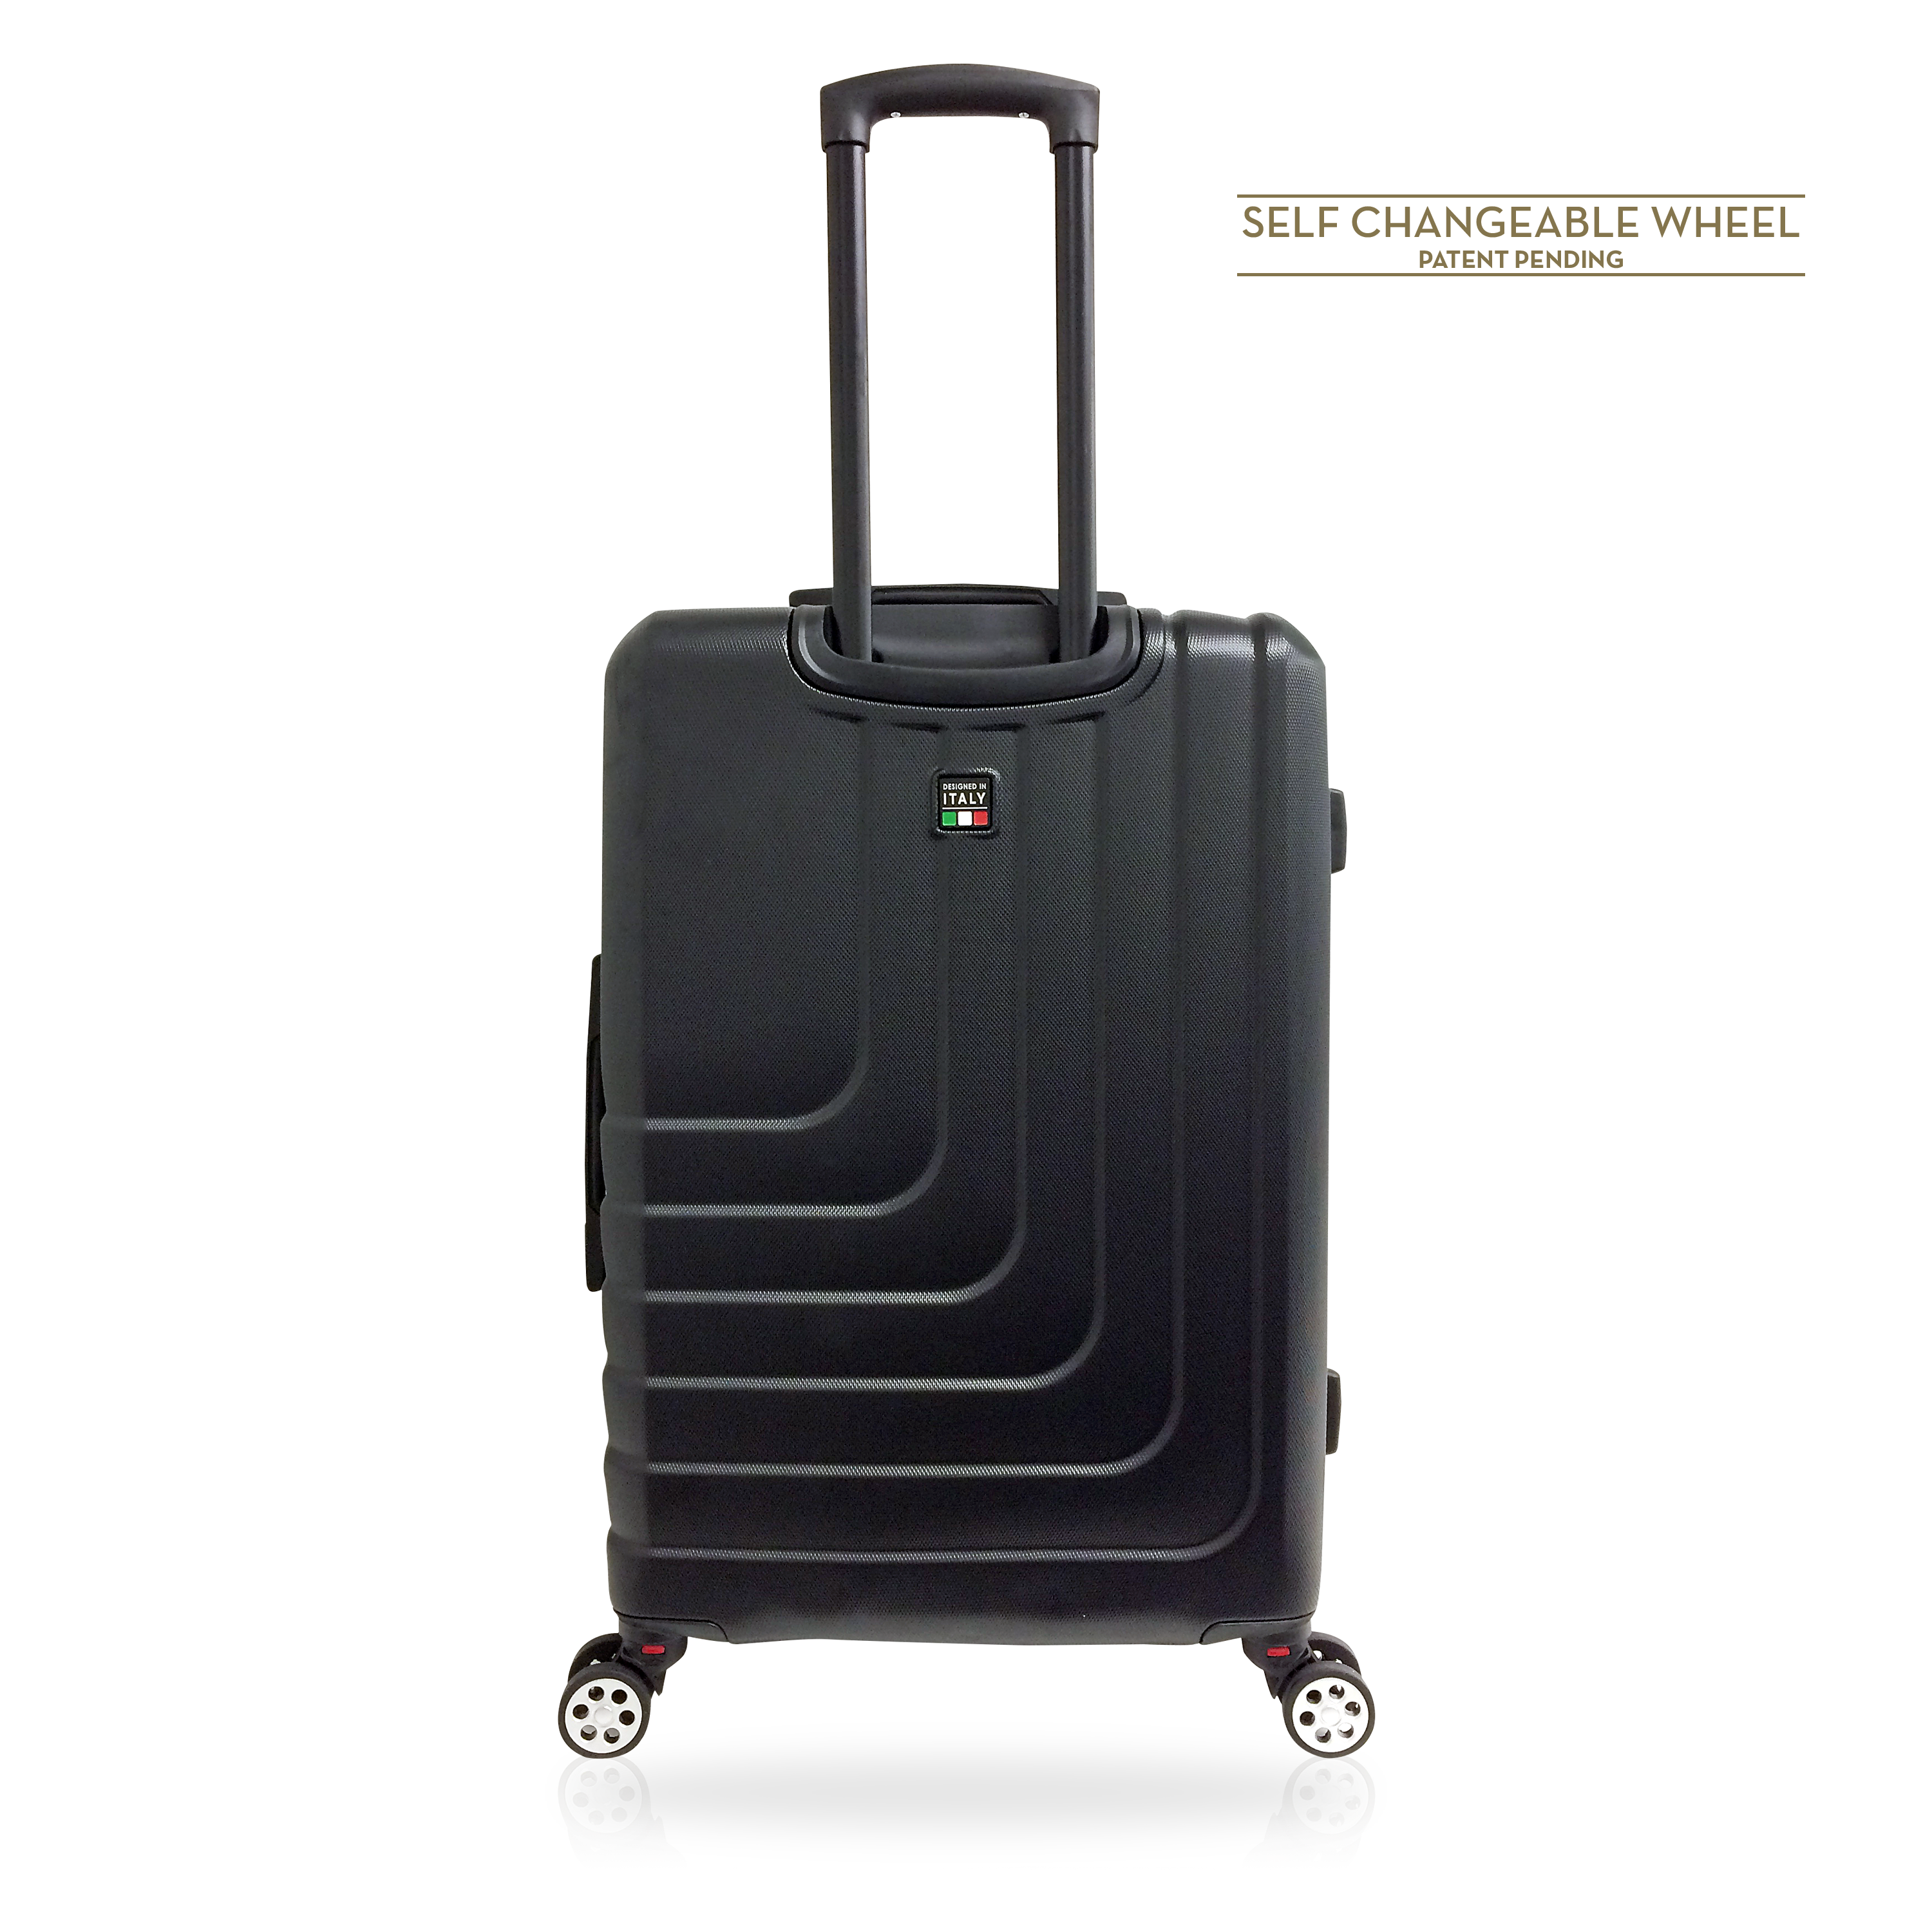 TUCCI CARINO 26" Unisex Medium Luggage